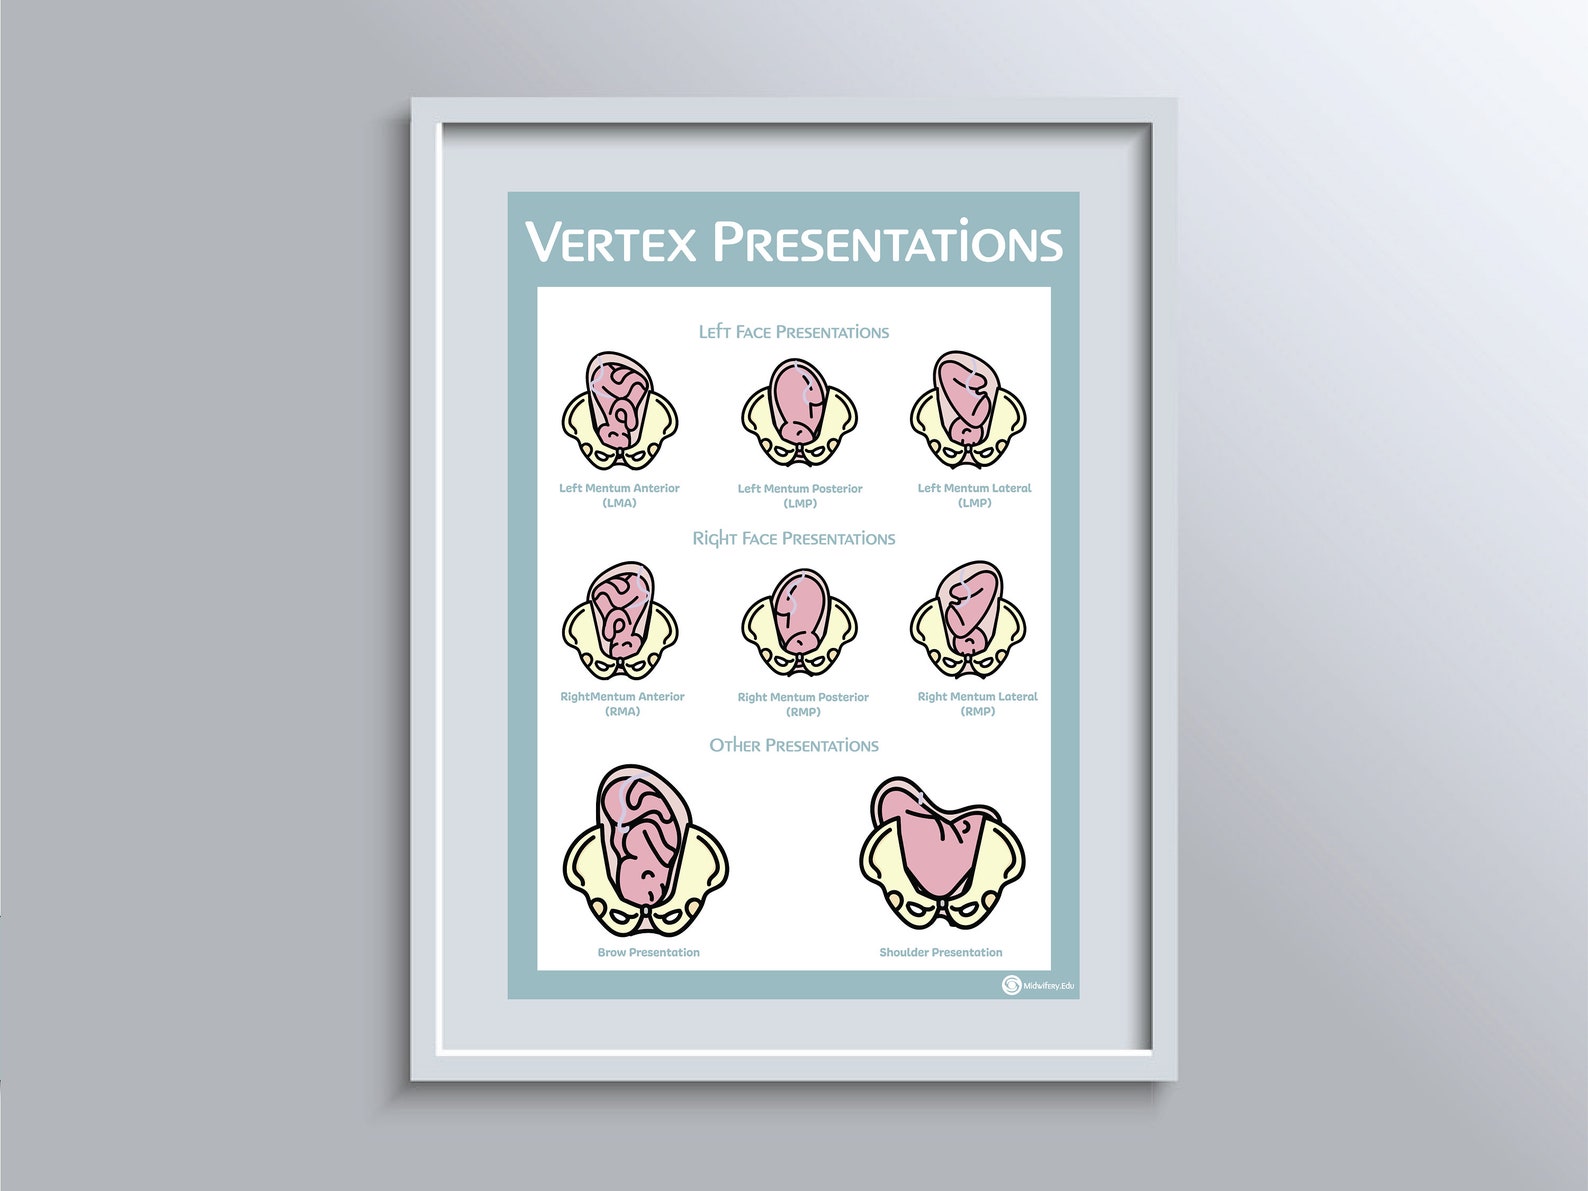 image of vertex presentation